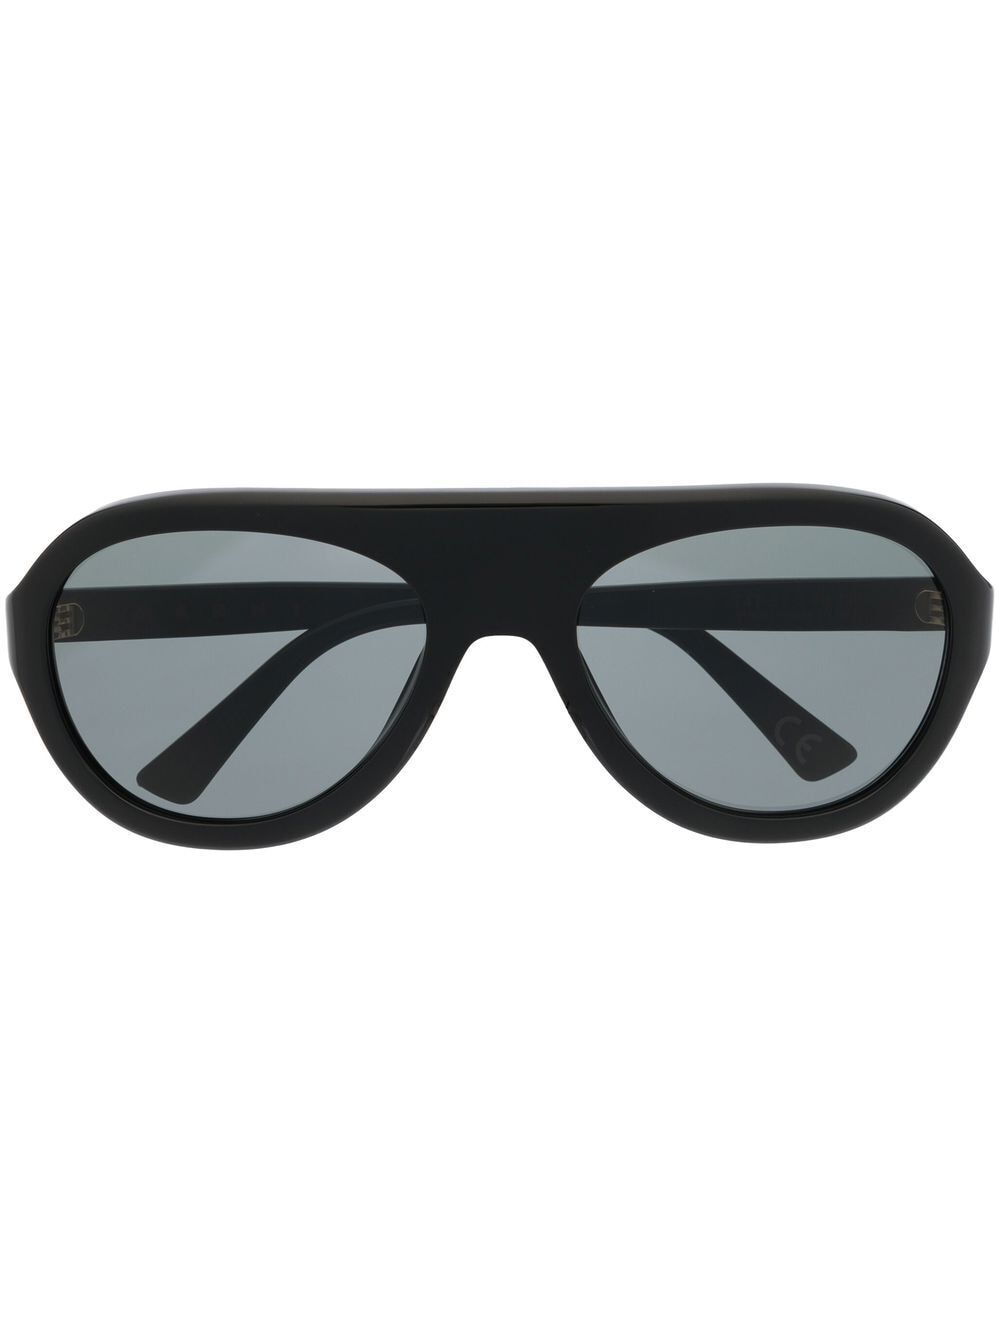 Marni Eyewear T4T round sunglasses - Black